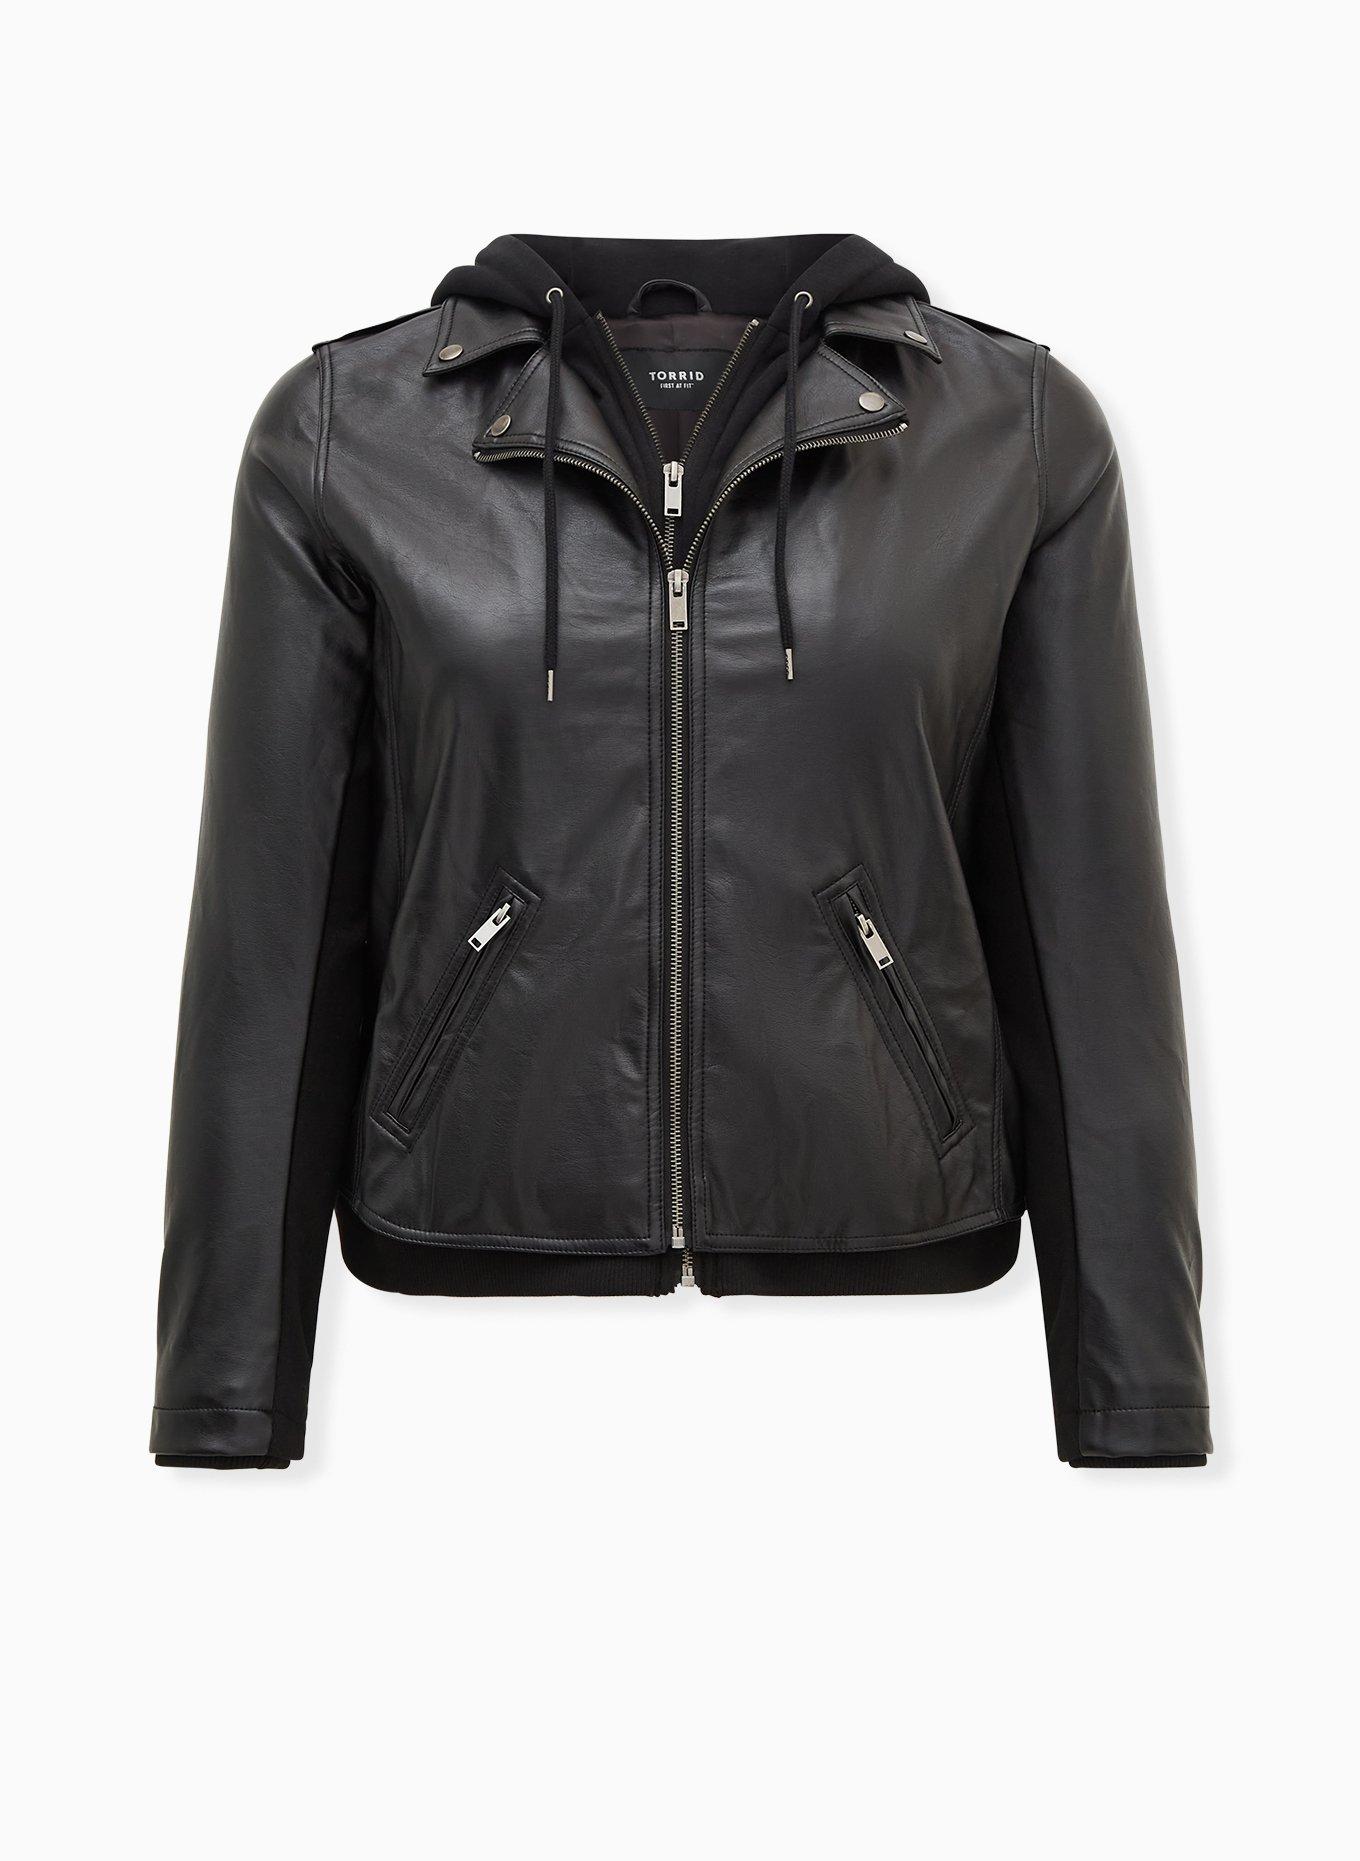 Model BH - Classic Black Leather Motorcycle Jacket - House Jacket